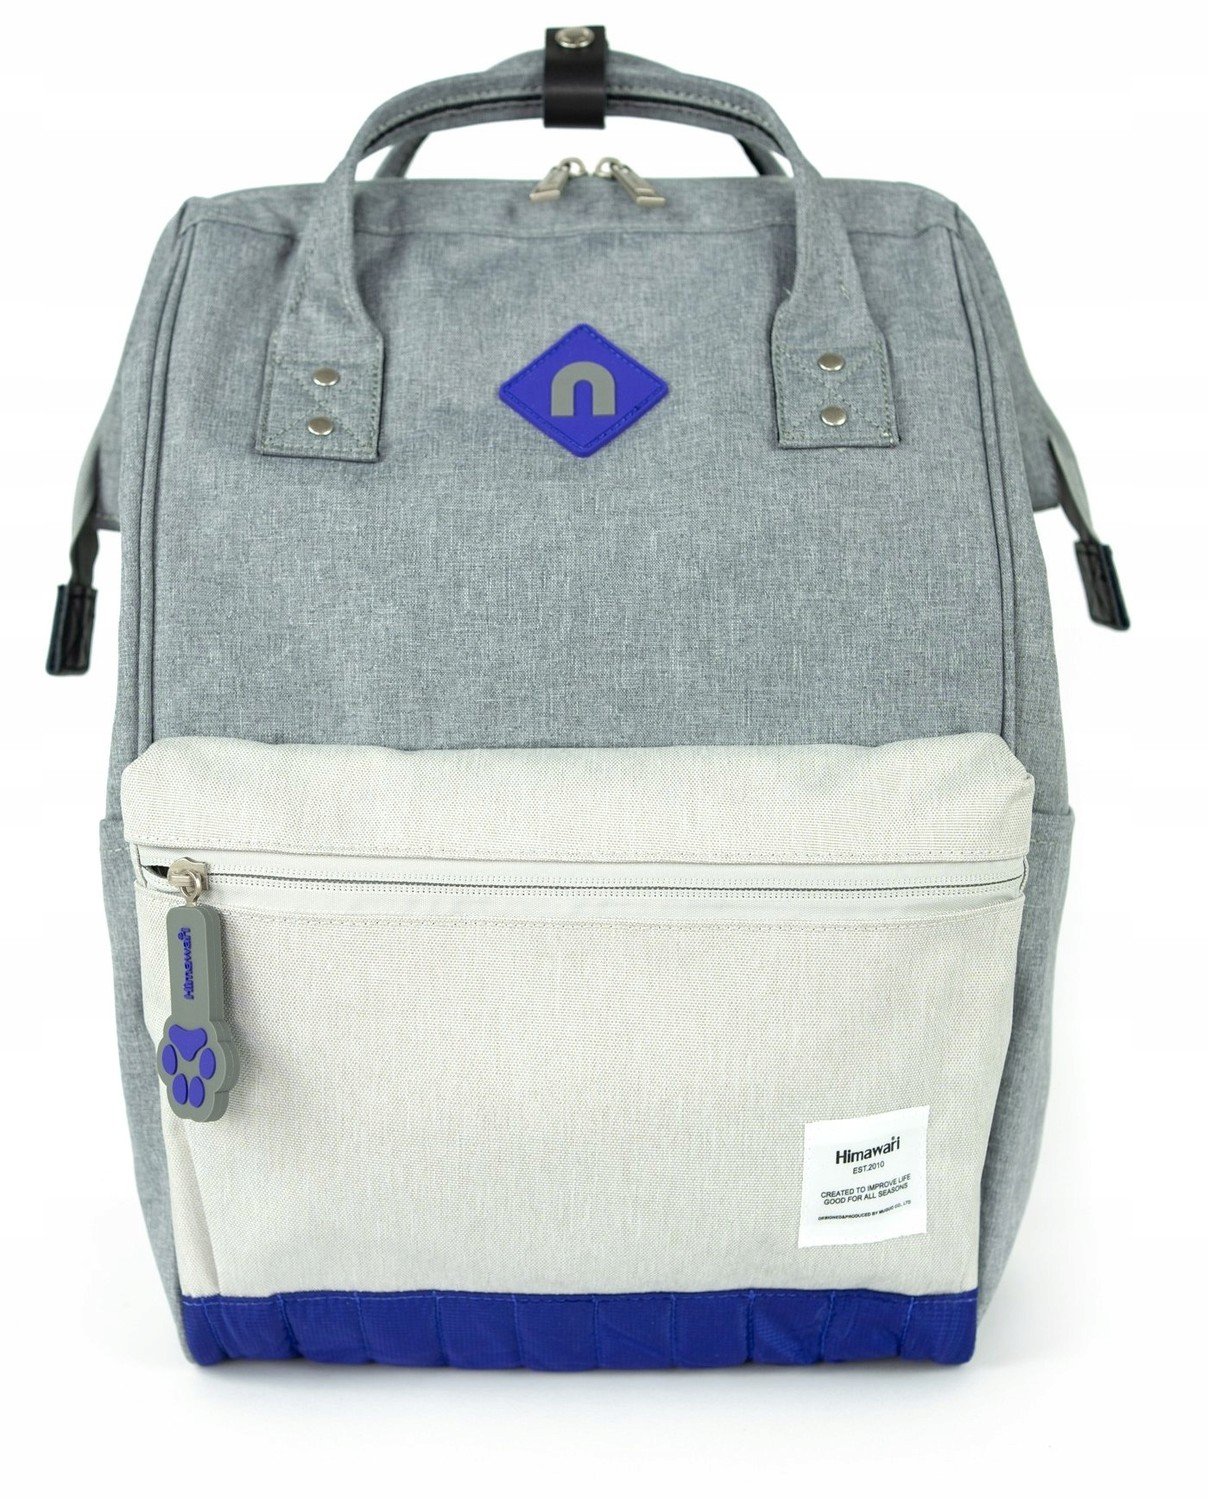 Školní batoh Himawari č. 38 Kitten M tr22312-8